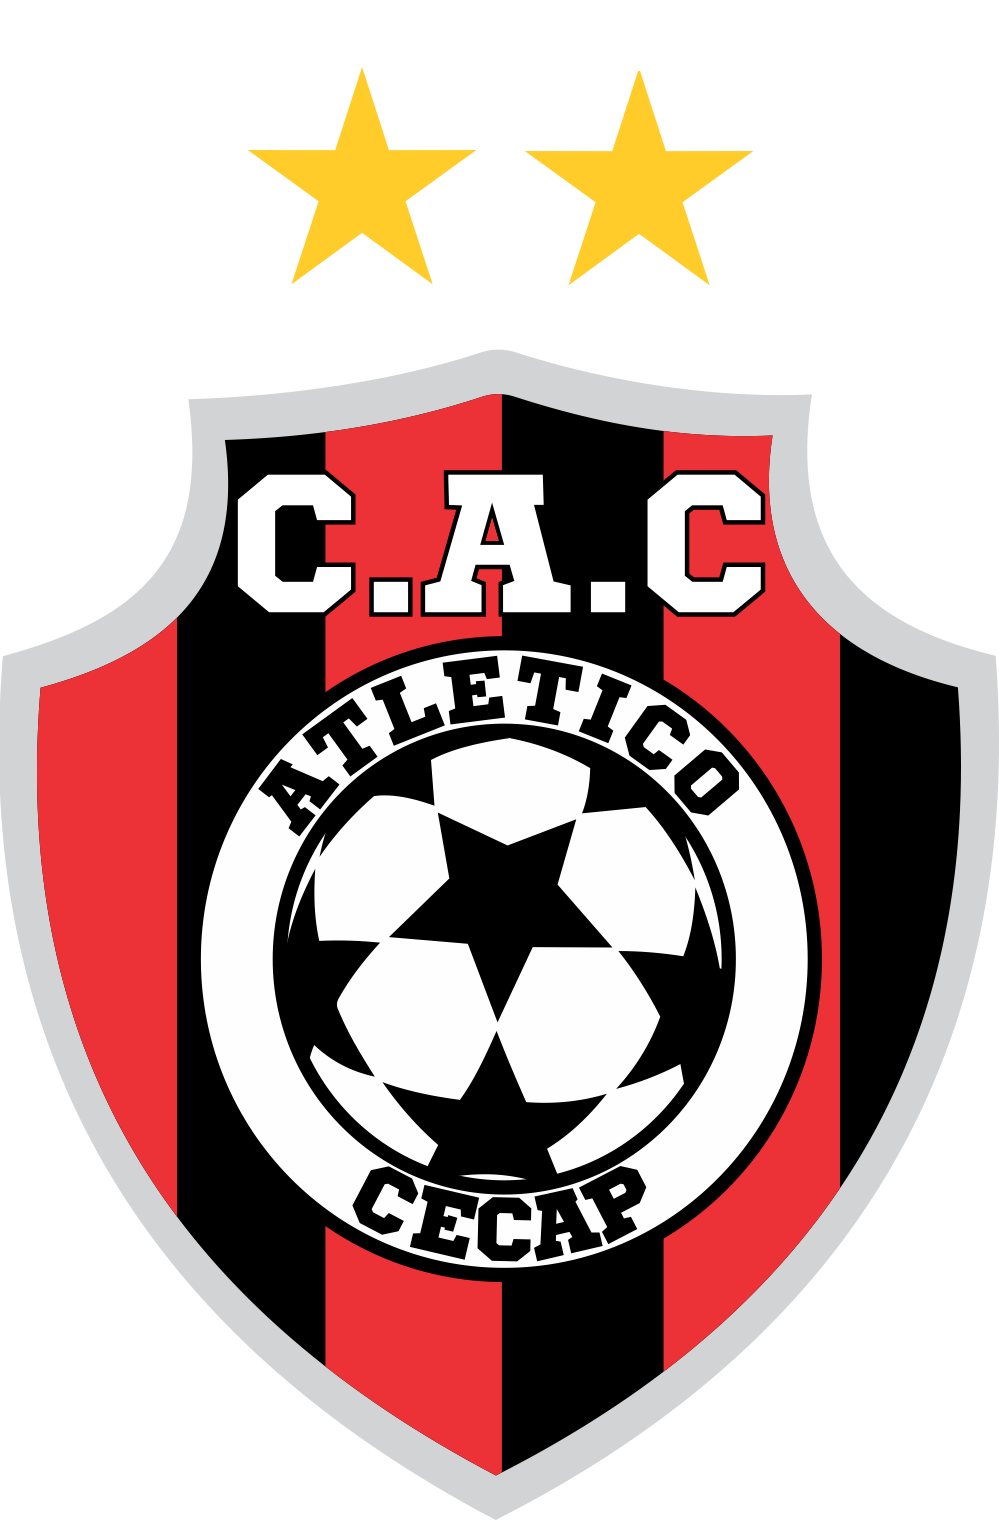 Clube Atlético Cecap